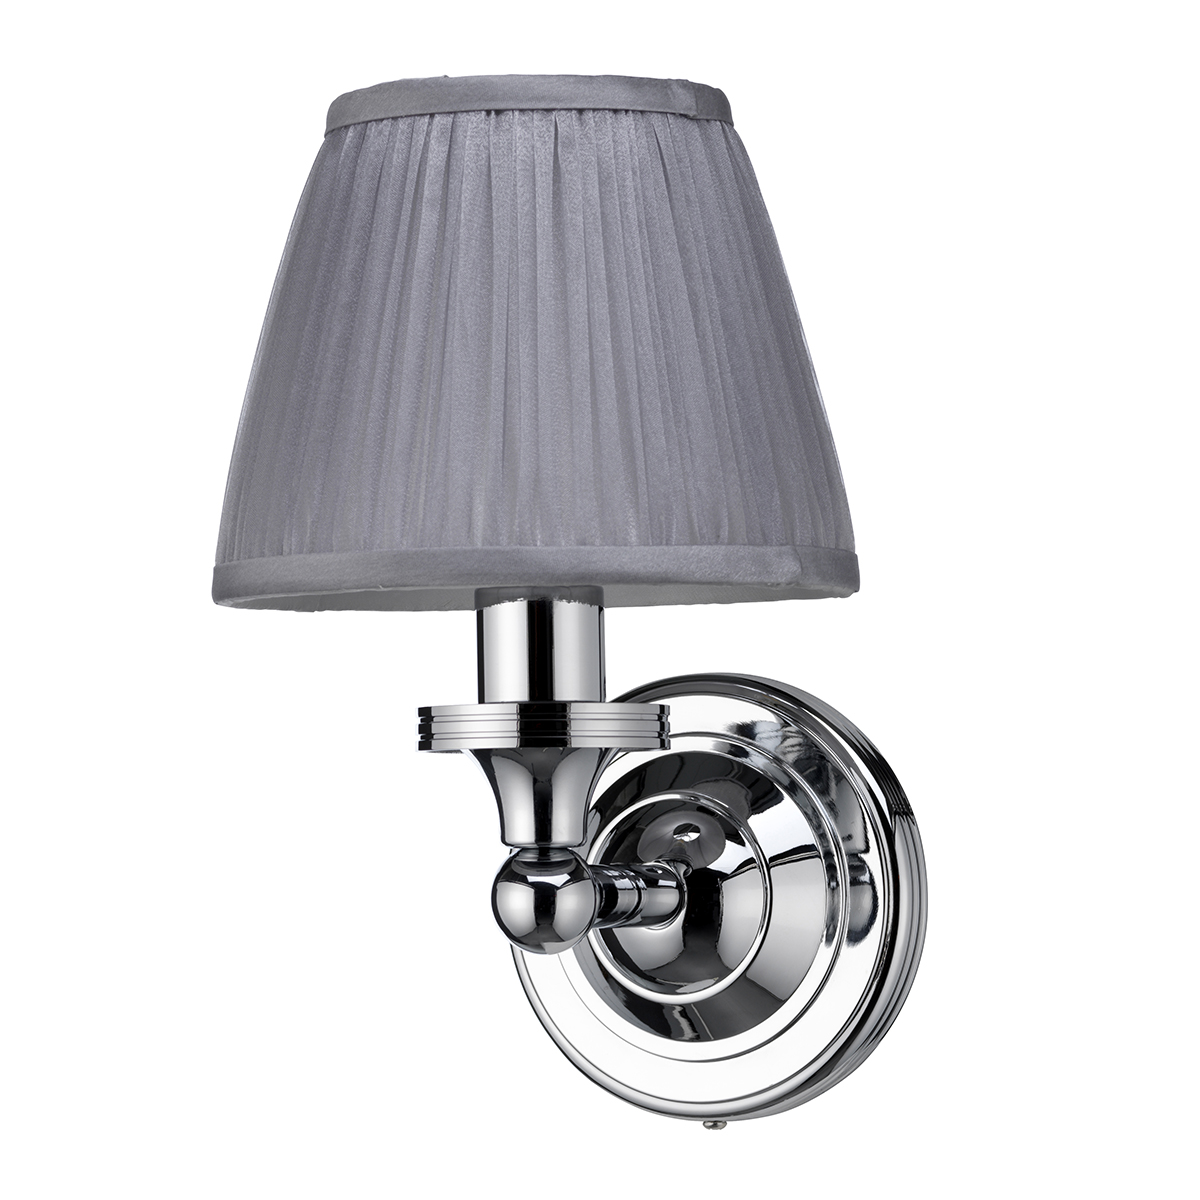 Burlington Round light with chrome base & silver chiffon shade